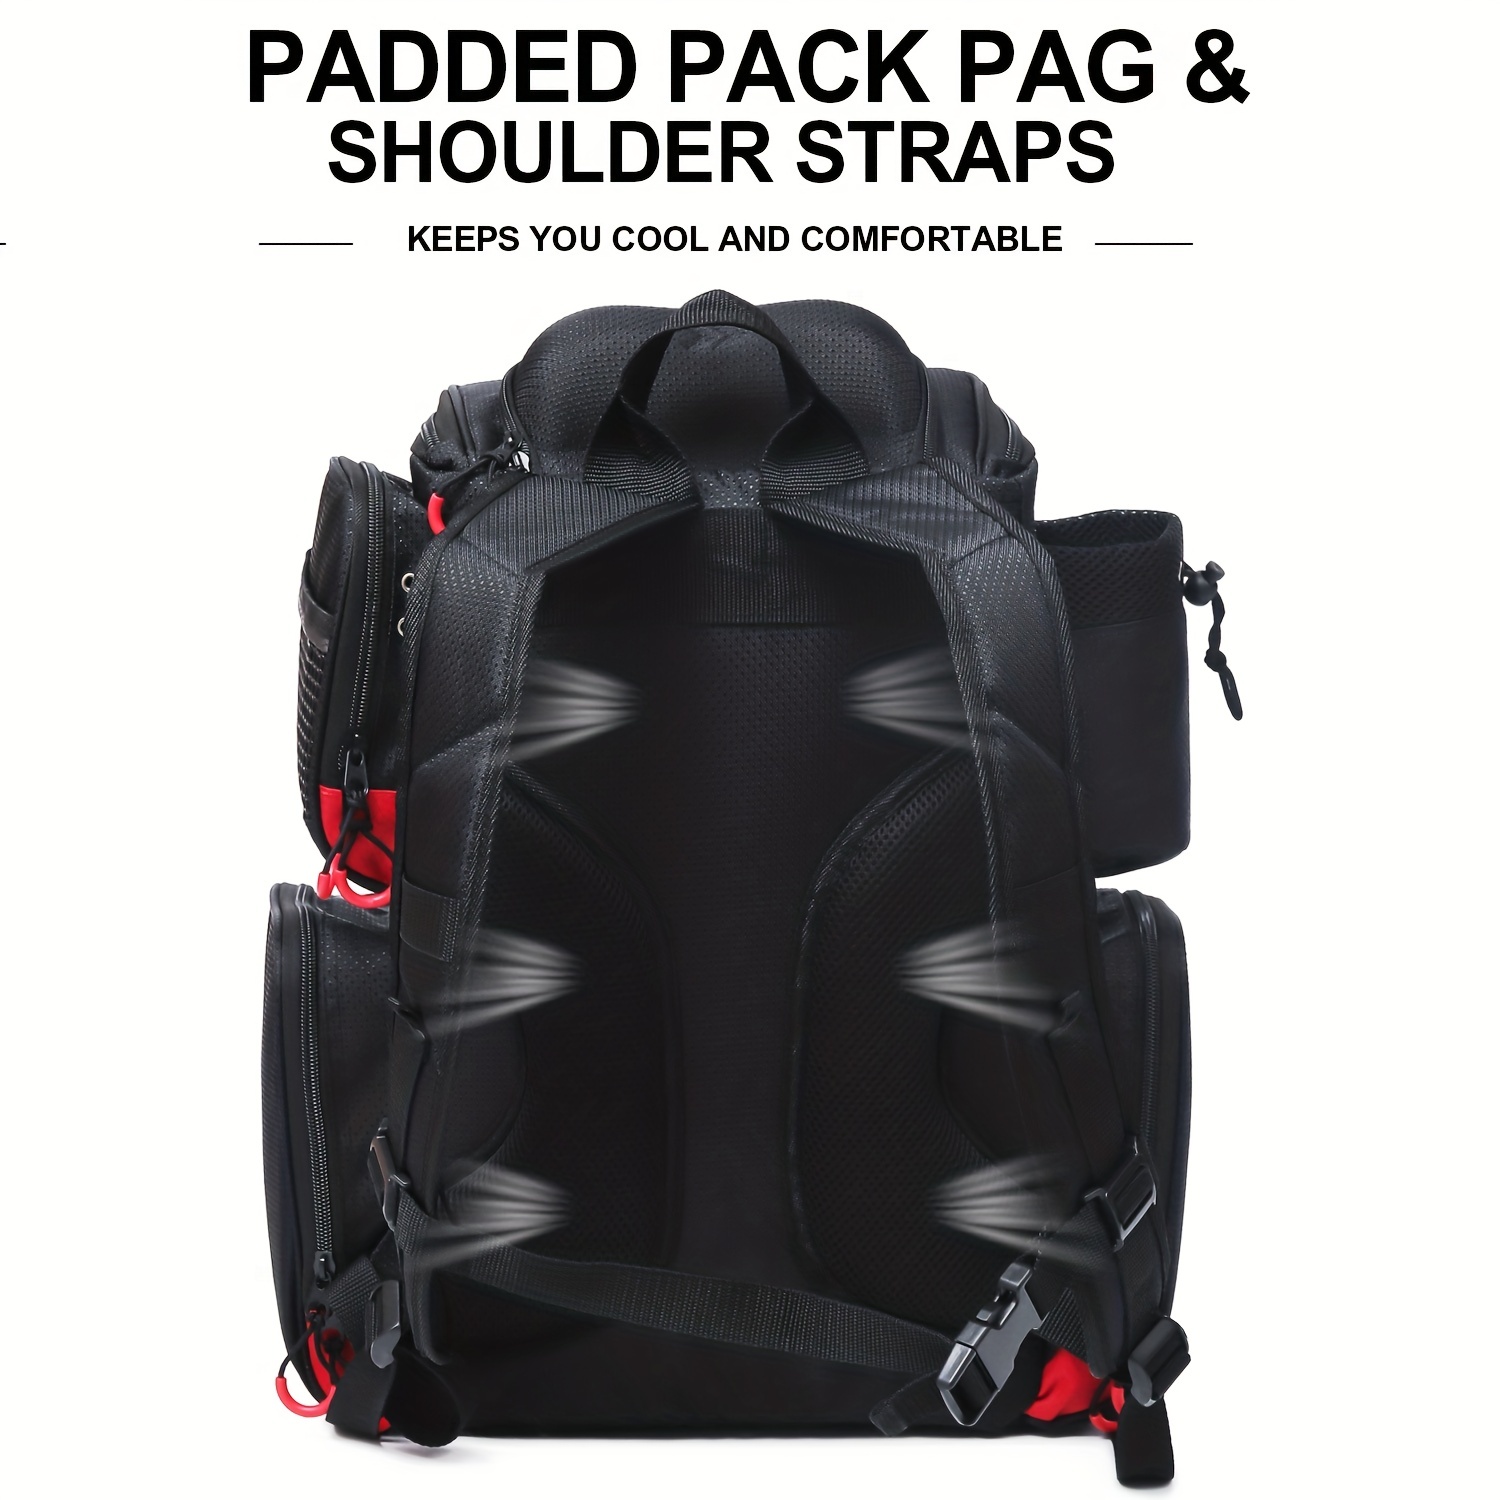 Sougayilang Fishing Tackle Backpack Waterproof Storage Bag - Temu